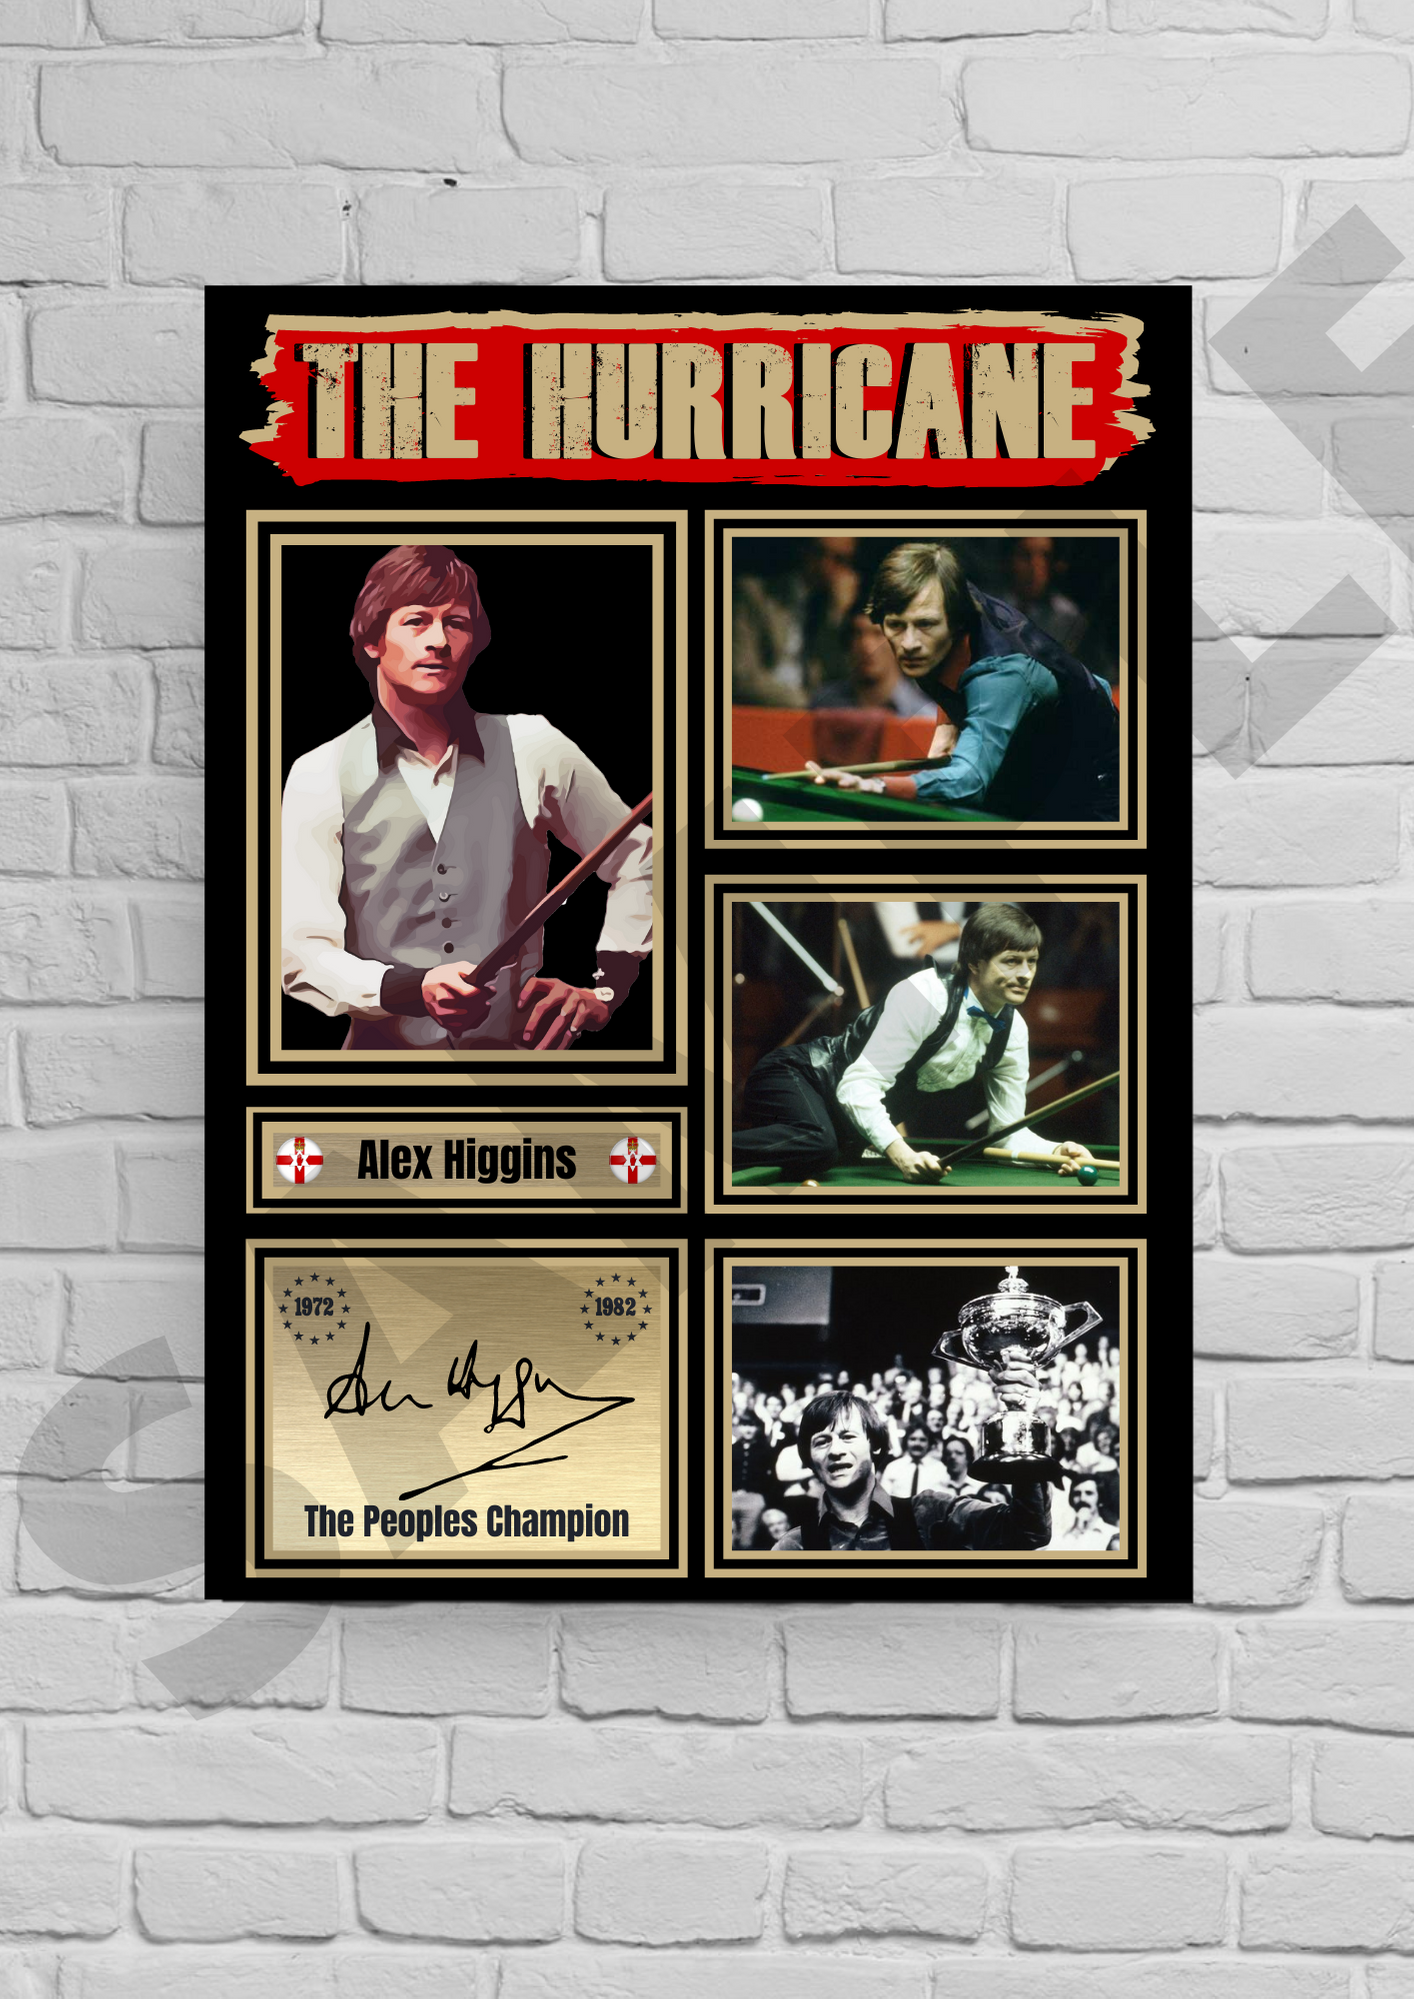 Alex Hurricane Higgins (Snooker) Collectable/Memorabilia #12 - Signed print